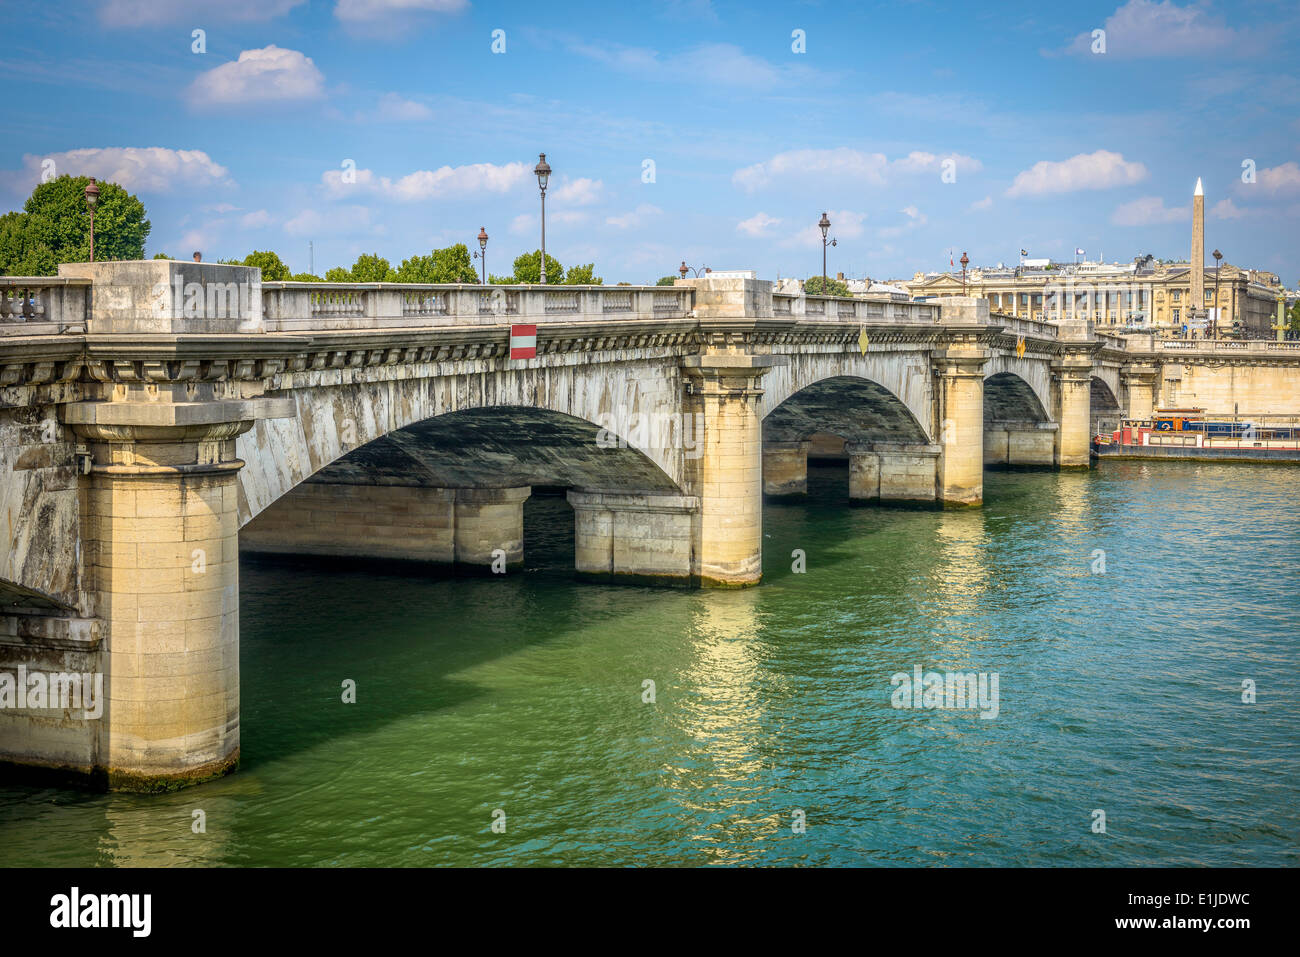 View of Pont de la concorde and Place de la Concorde in Paris, France Stock Photo